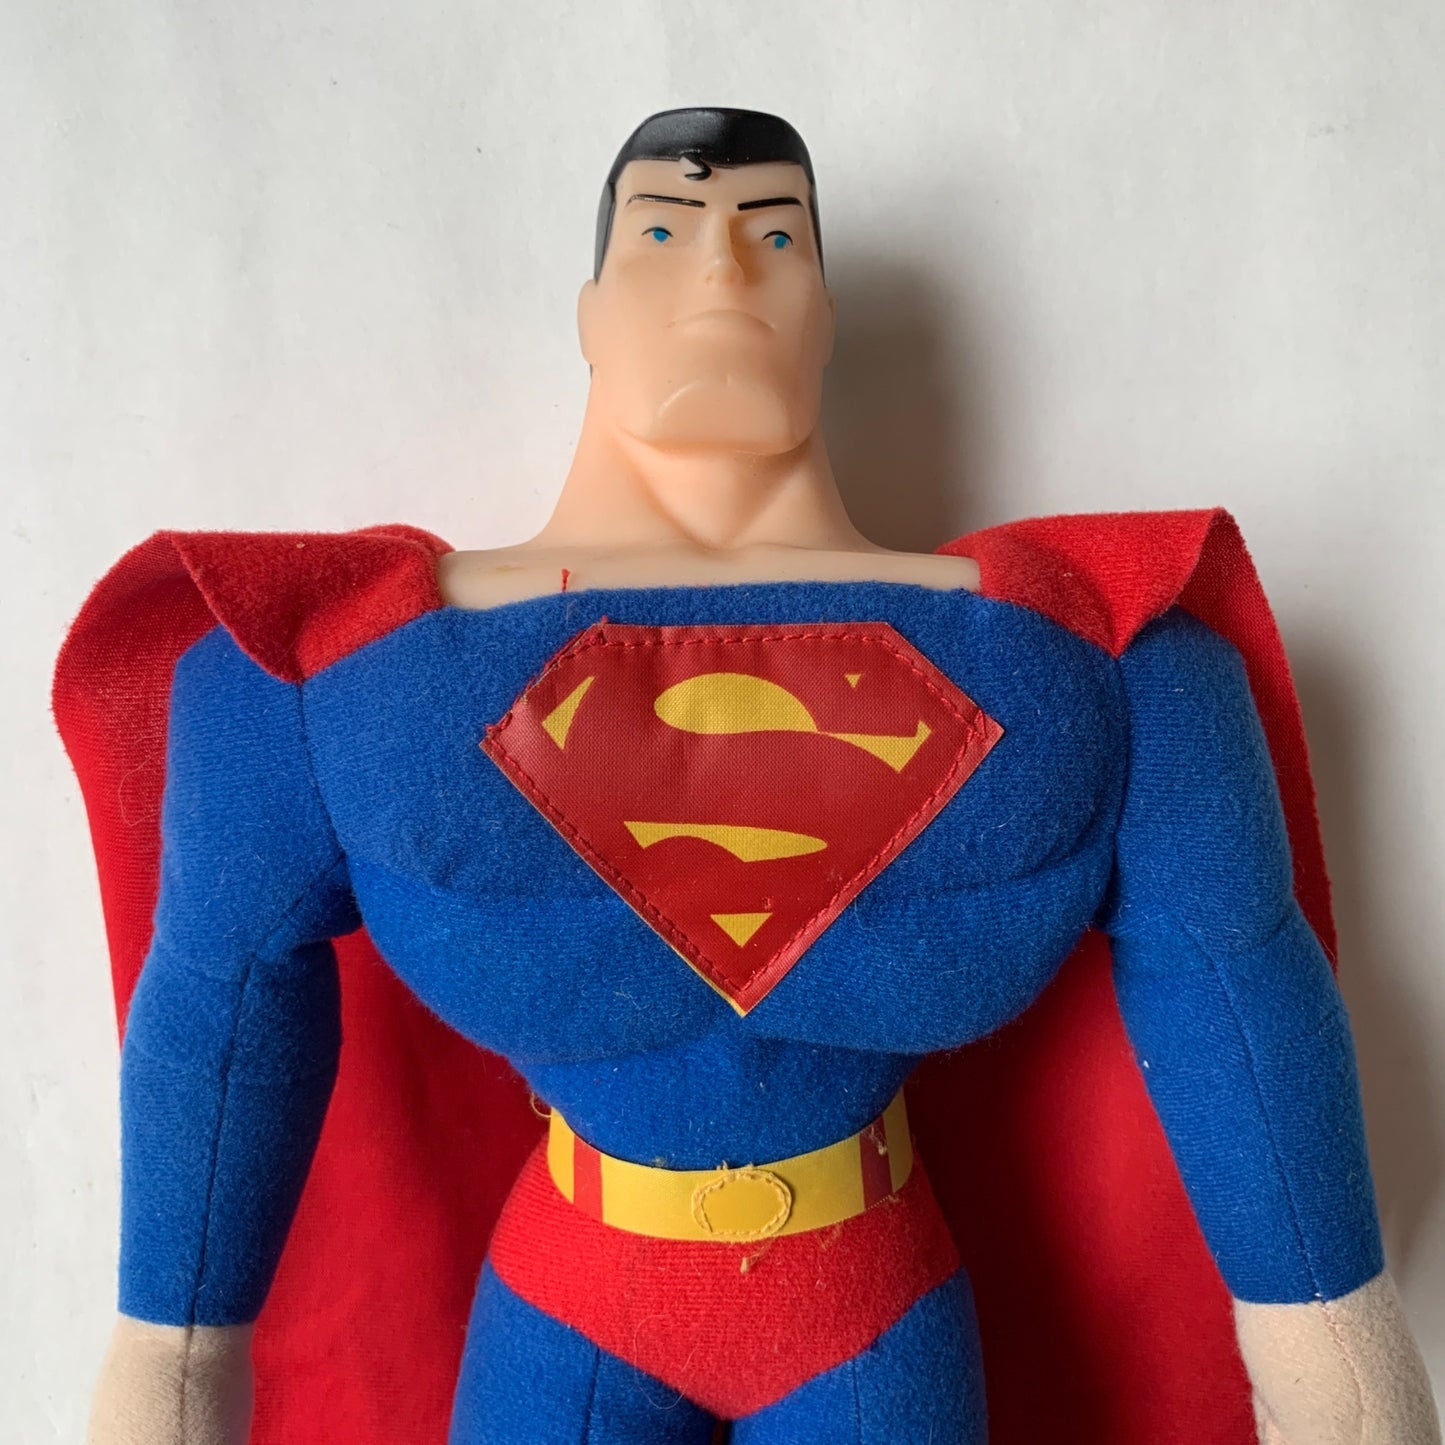 Toy Factory Justice League Superman Plush